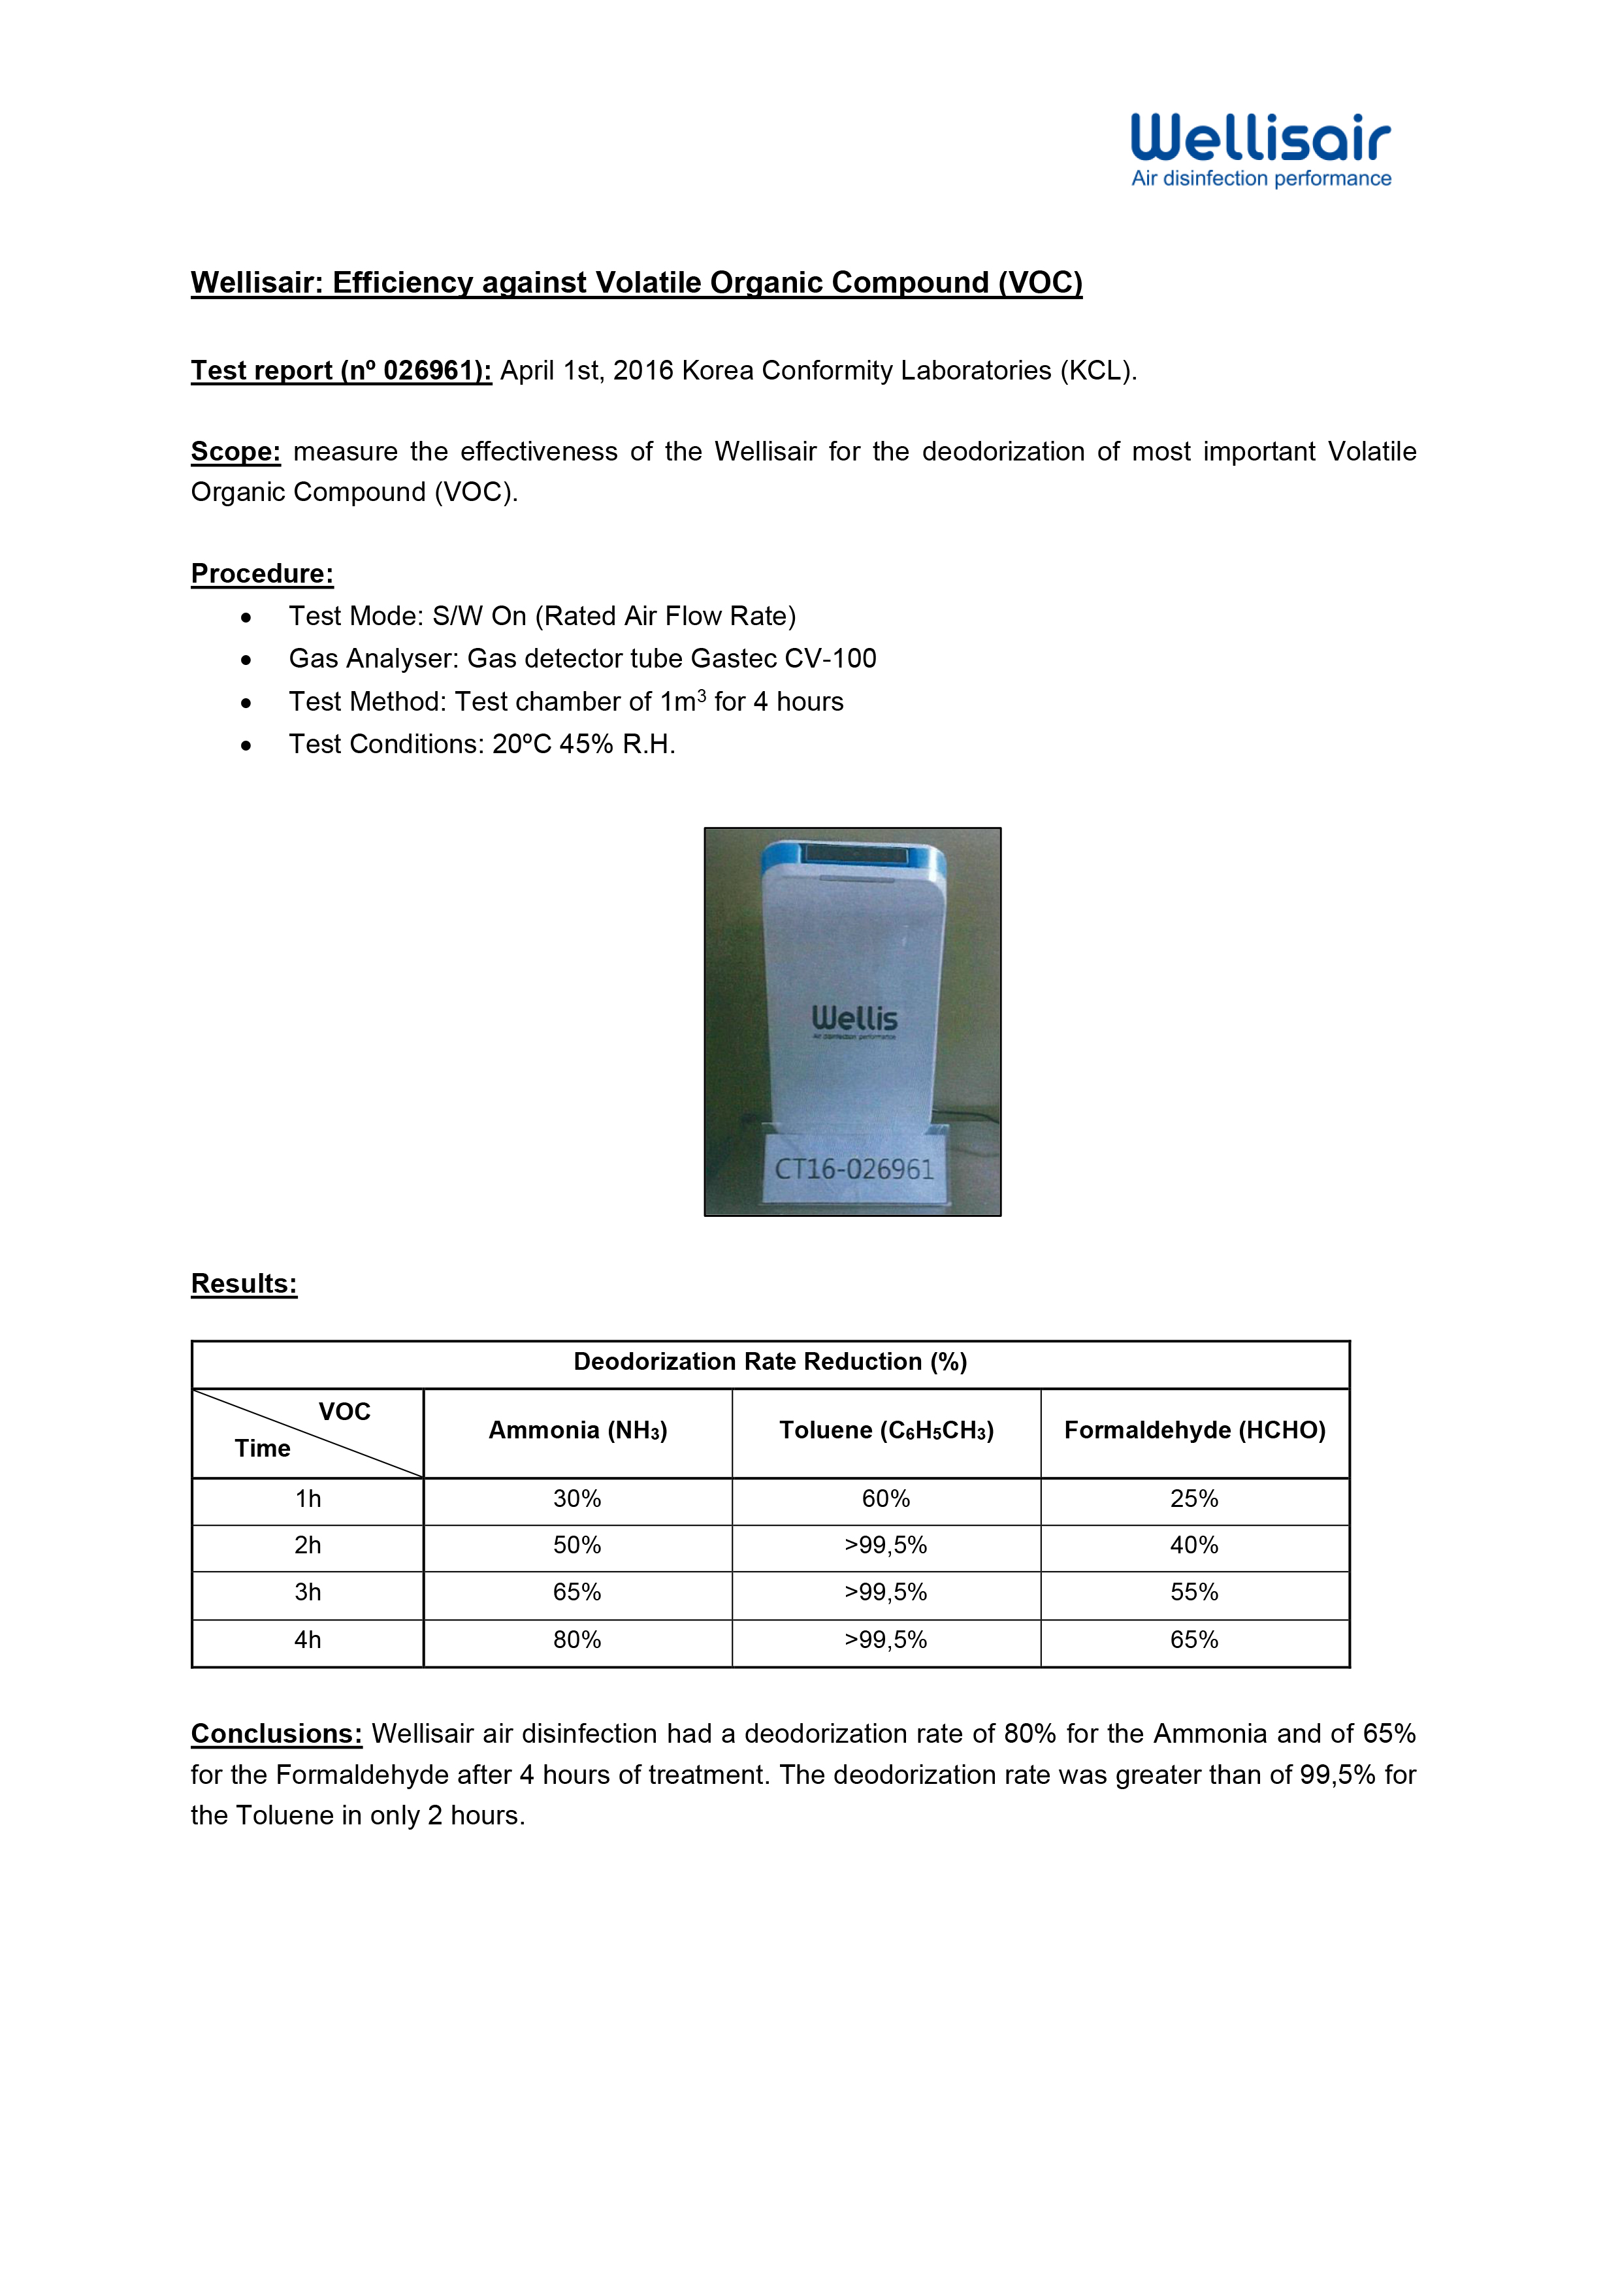 Efficiency against Volatile Organic Compound (VOC) deodorization - Test result Korea Conformity Laboratories